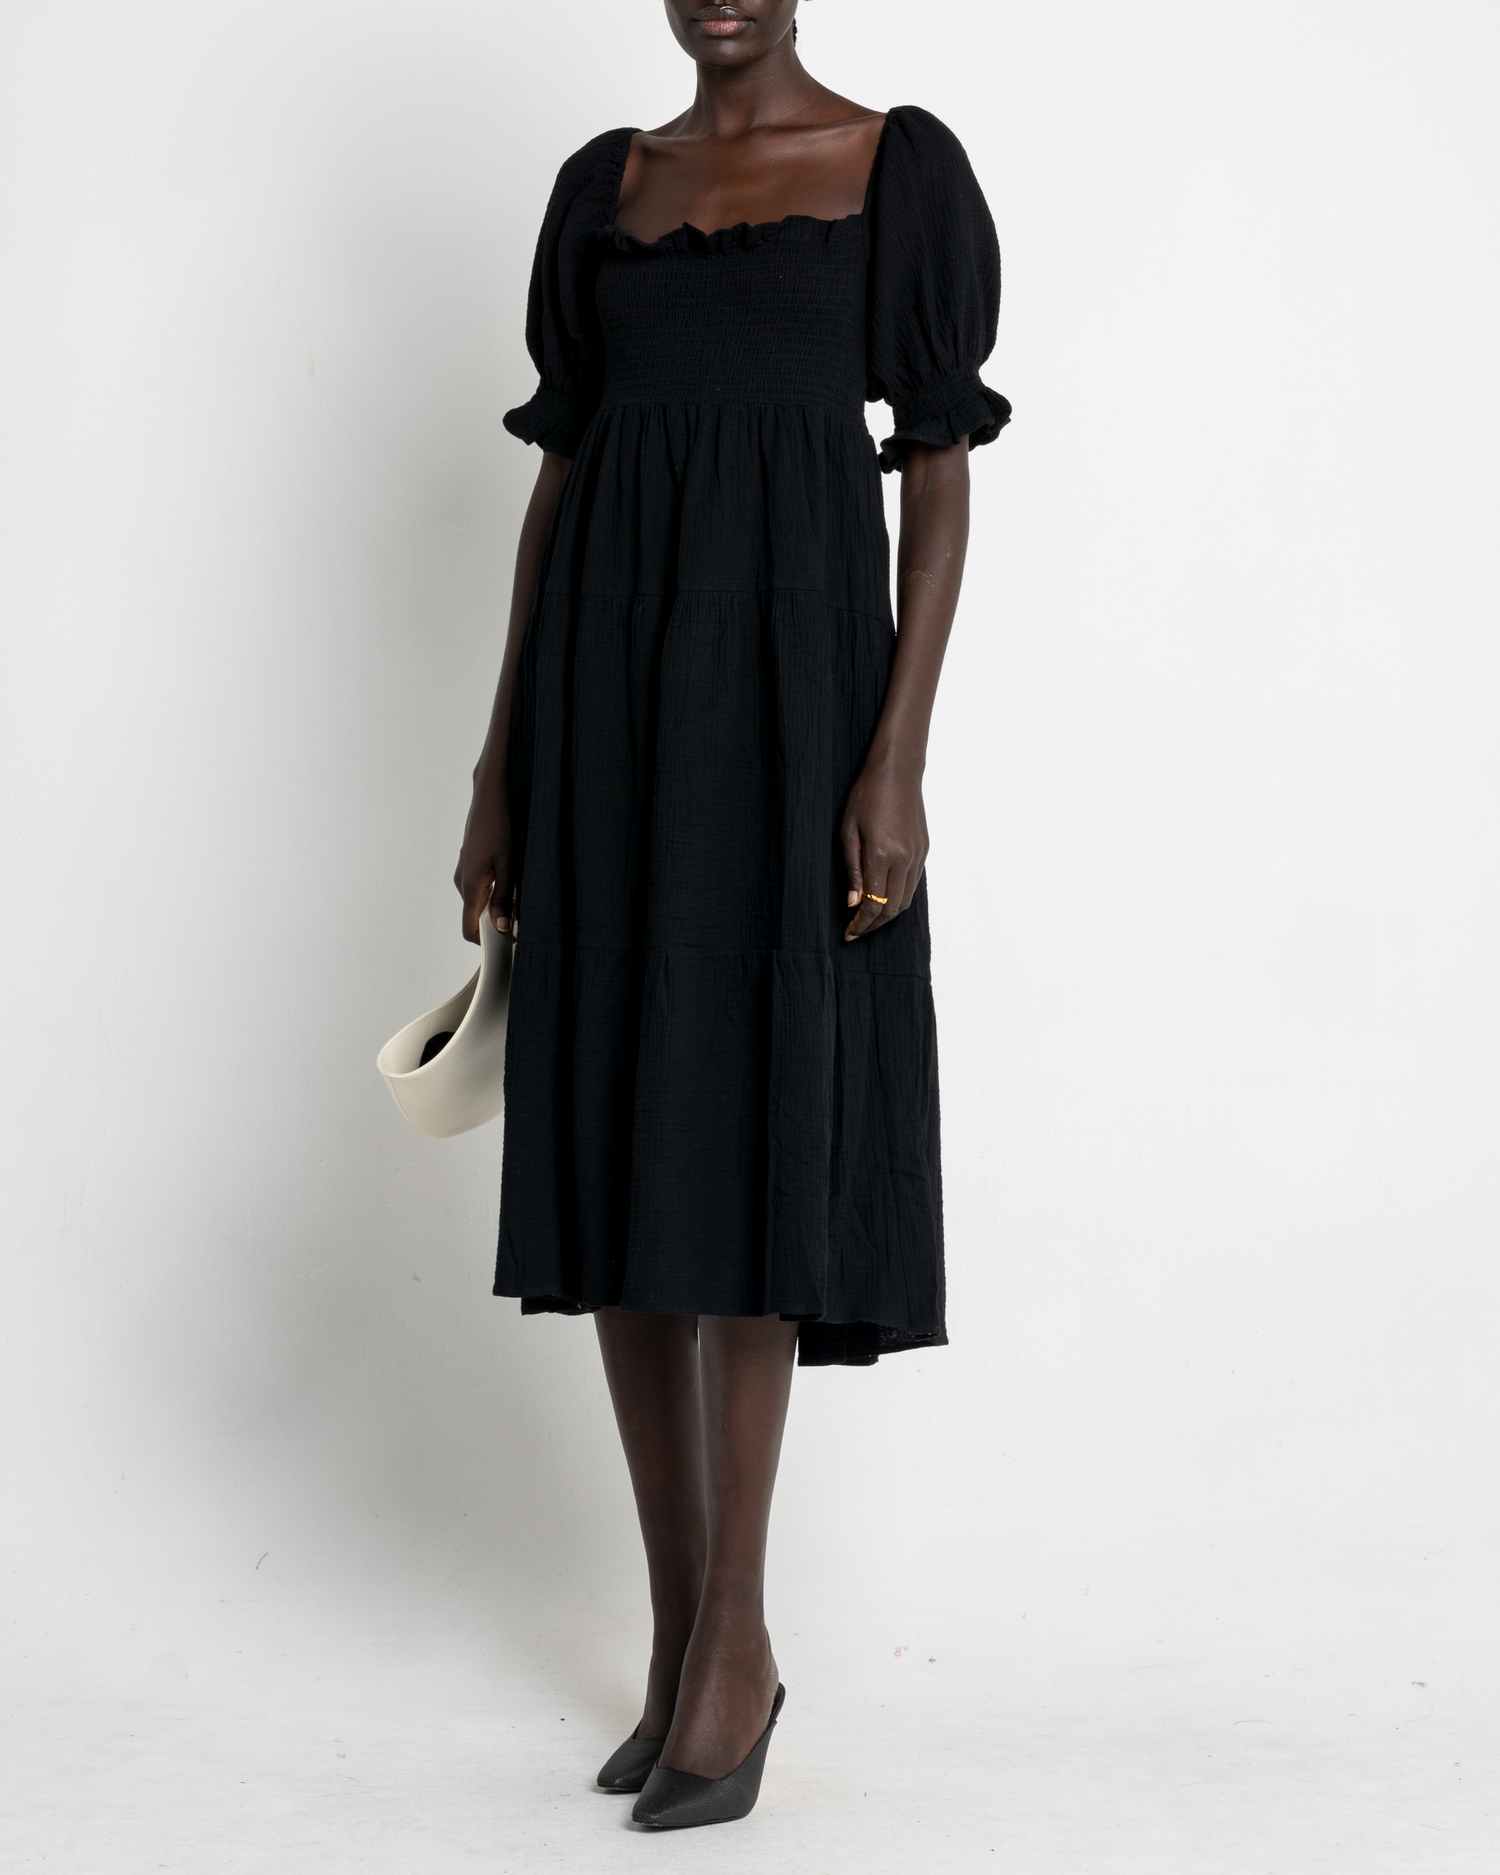 Fifth image of Frankie Dress, a black midi dress, puff sleeves, short sleeves